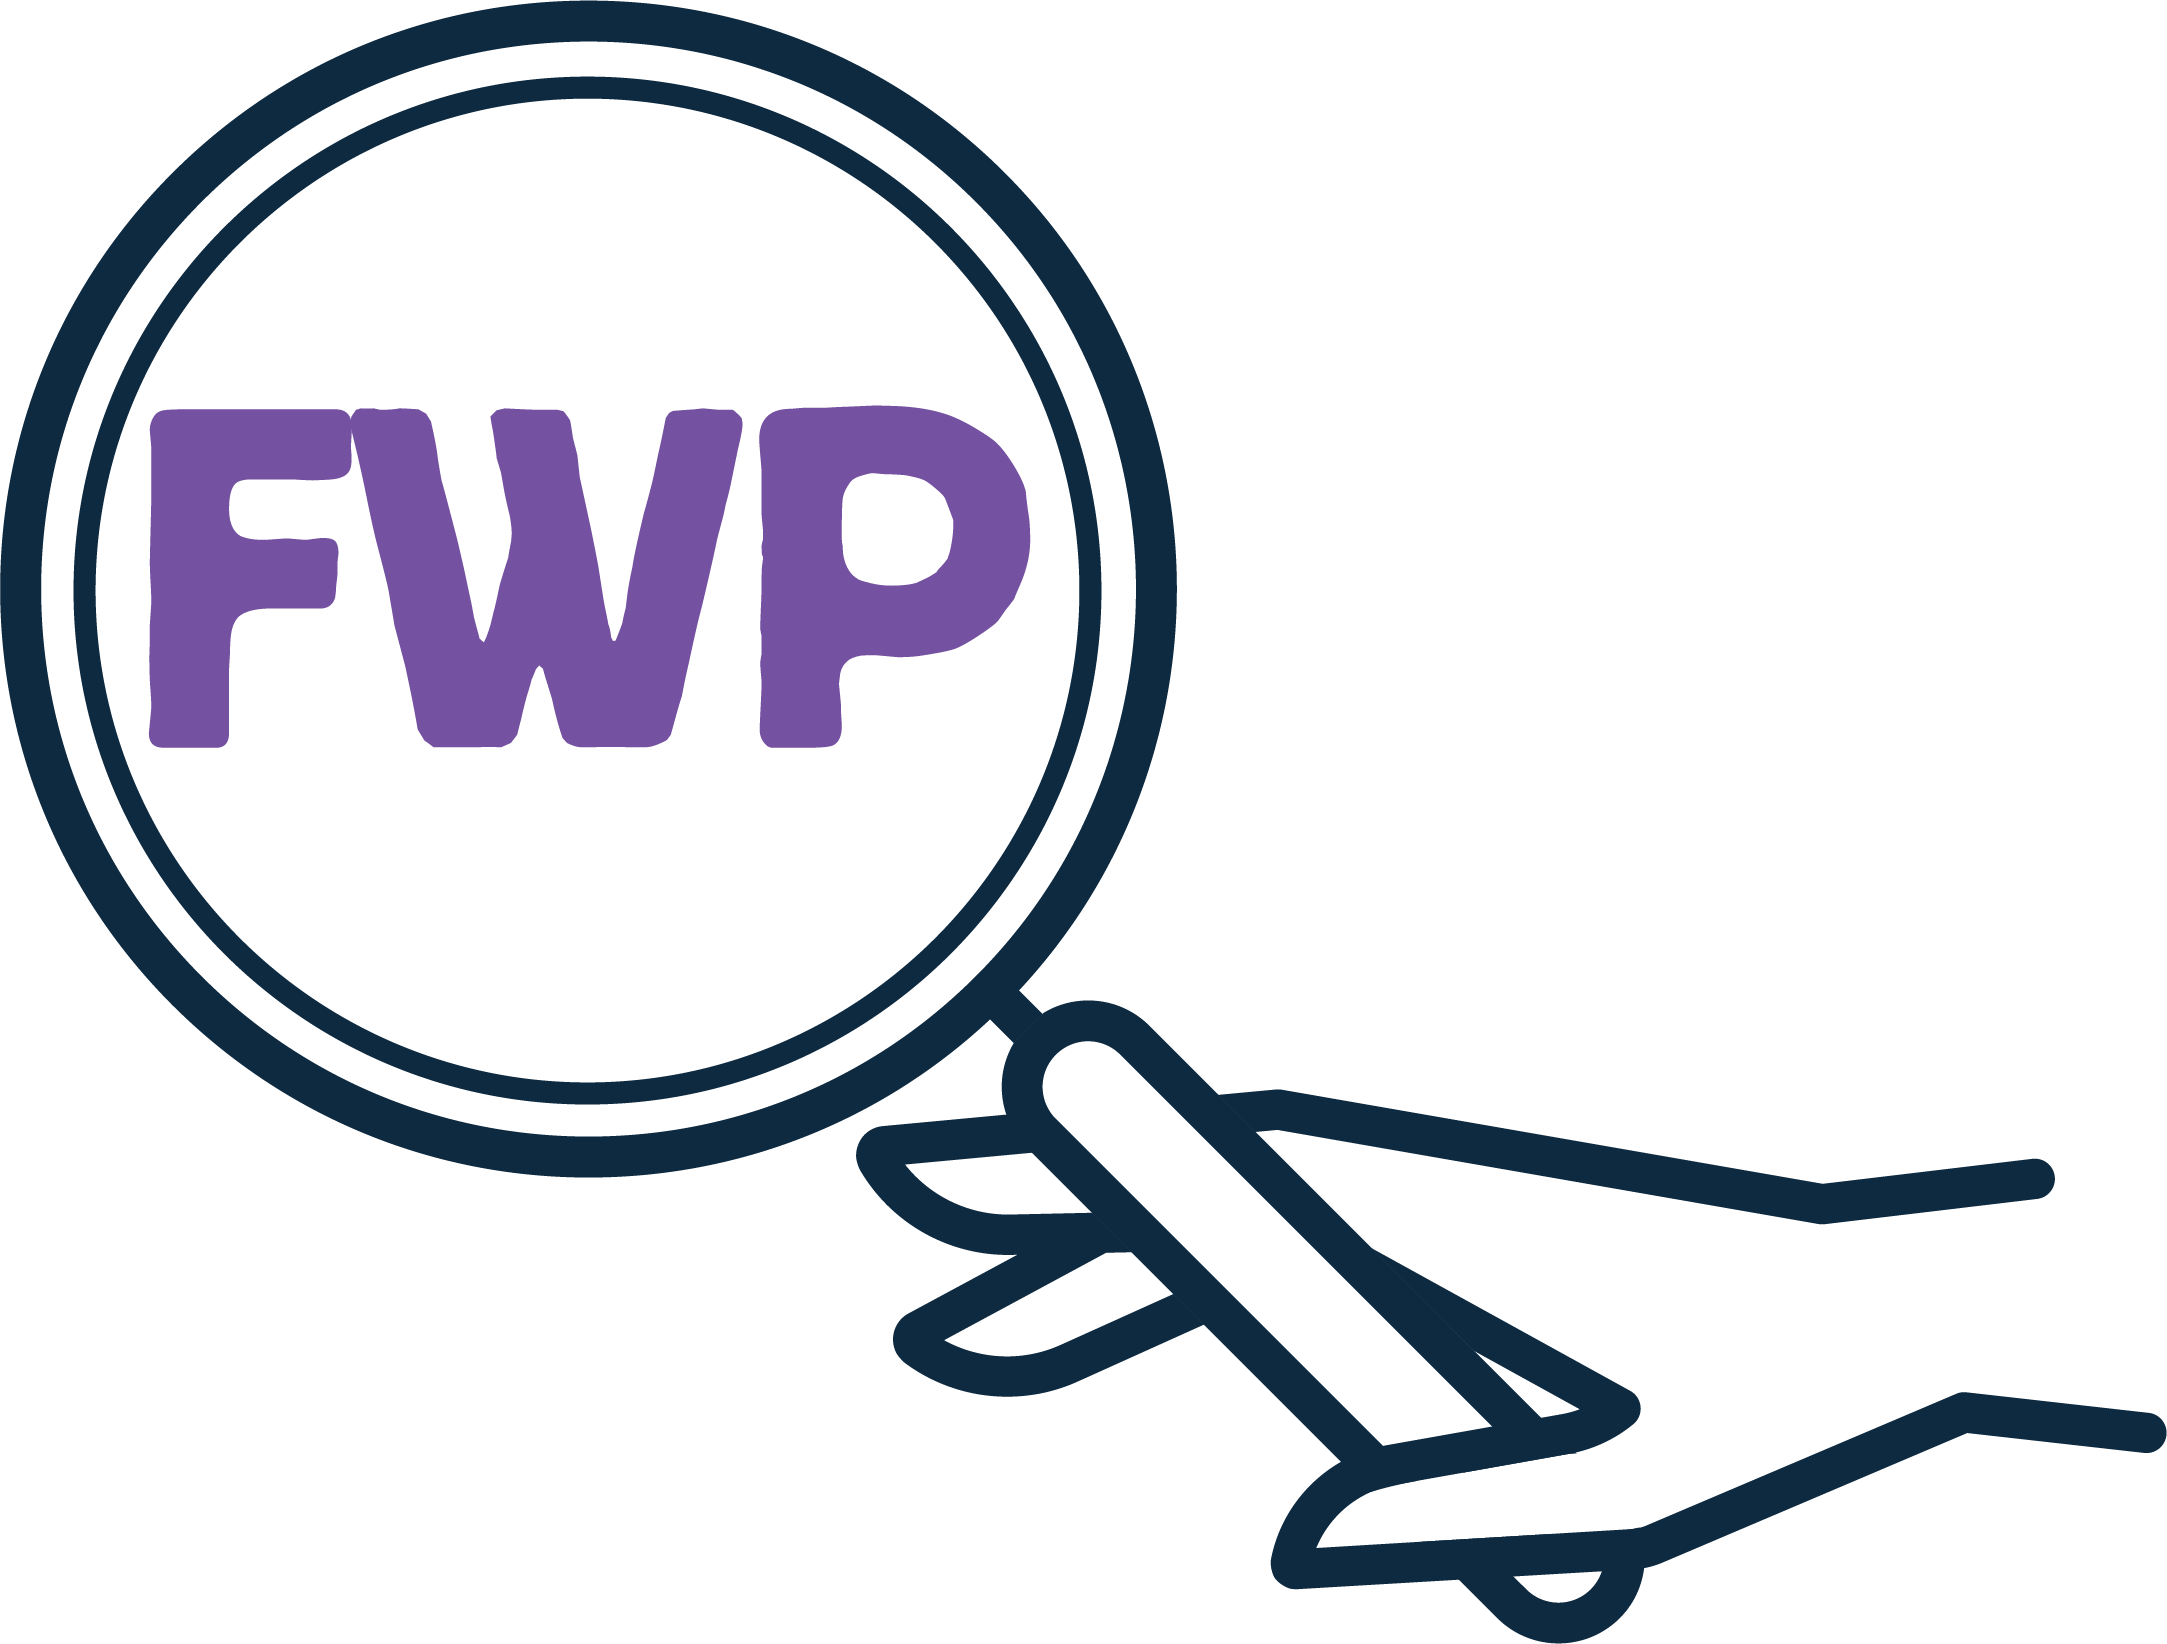 FWP logo mag